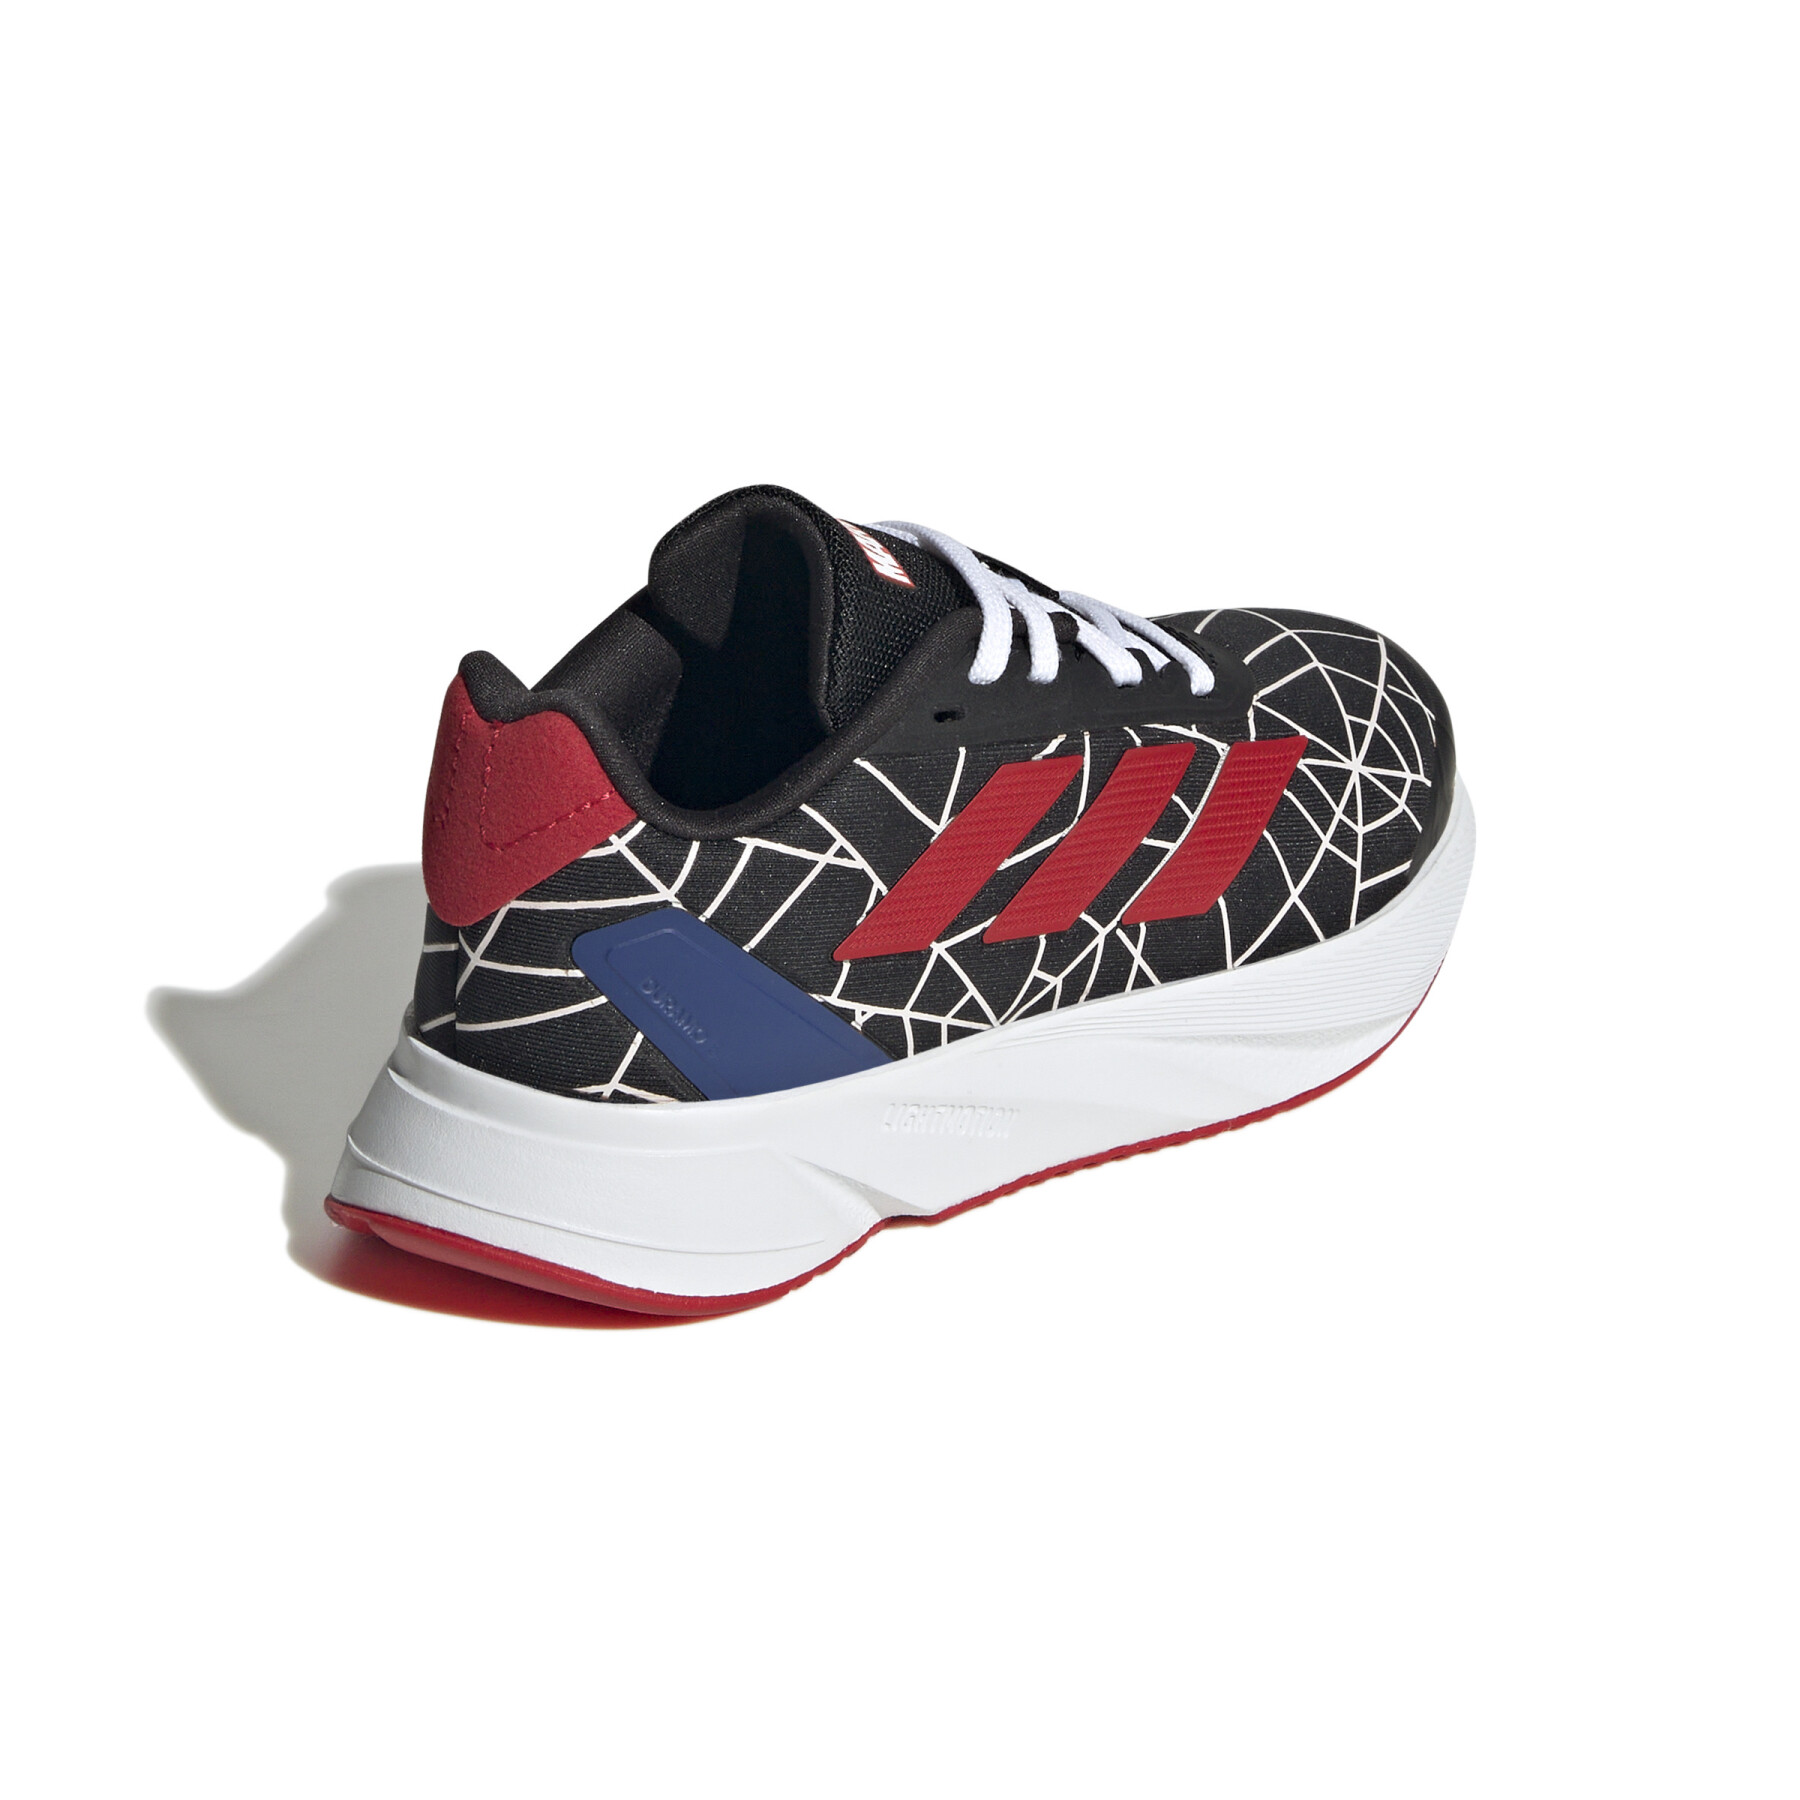 Children's running shoes adidas Duramo SL x Marvel